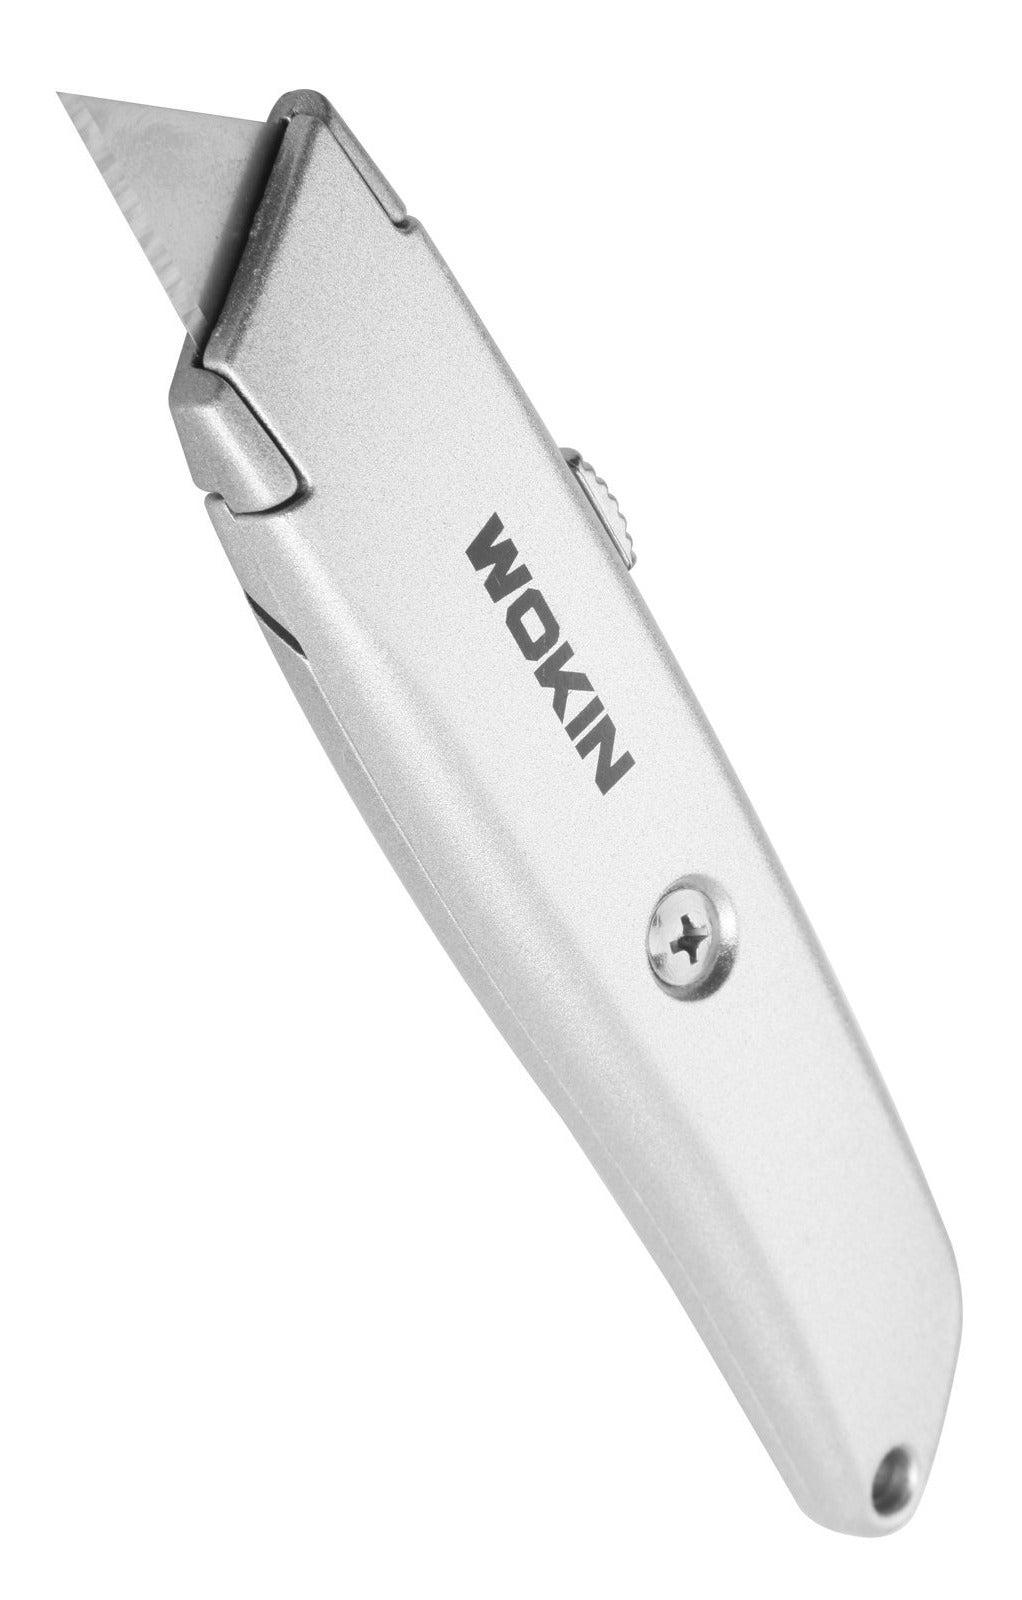 Wokin Aluminum Alloy Body Utility Knife